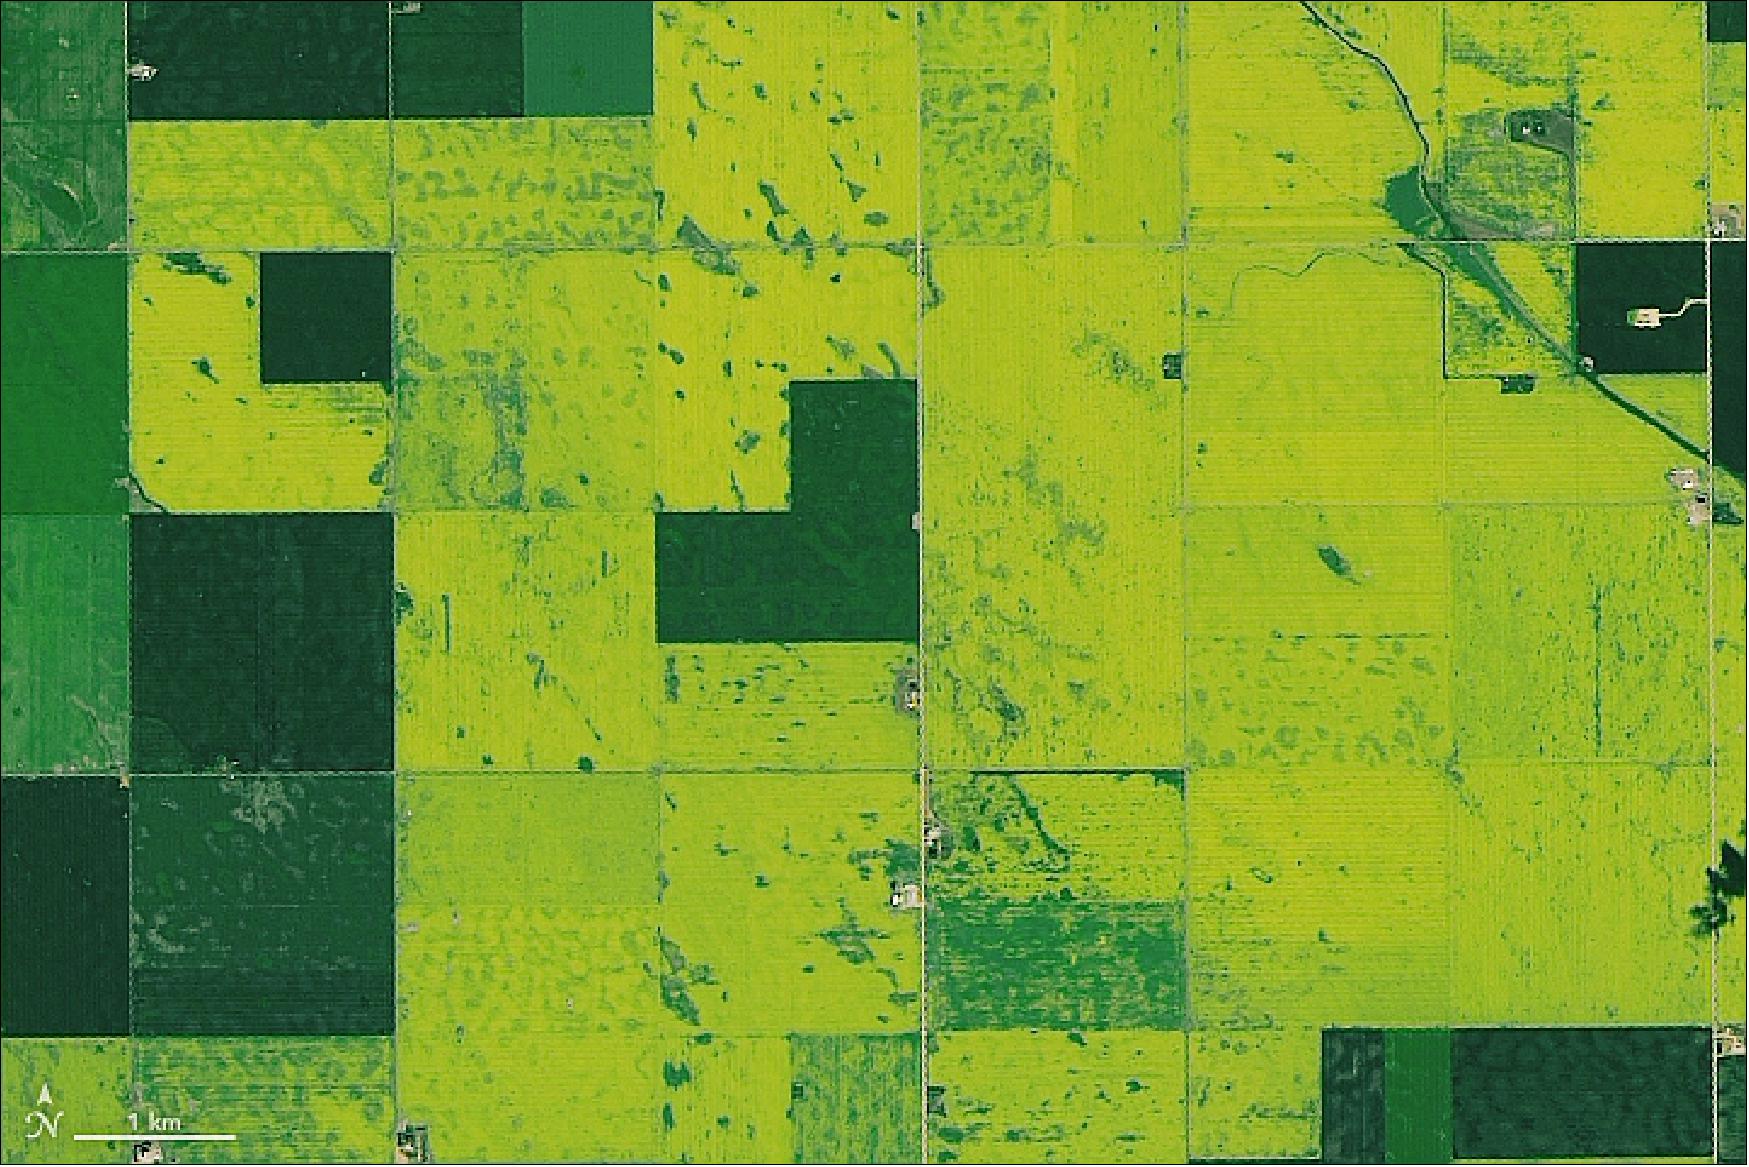 Figure 23: OLI detail image of canola in bloom near Regina, Saskatchewan (image credit: NASA Earth Observatory, image by Lauren Dauphin, using Landsat data from the U.S. Geological Survey, Story by Adam Voiland)